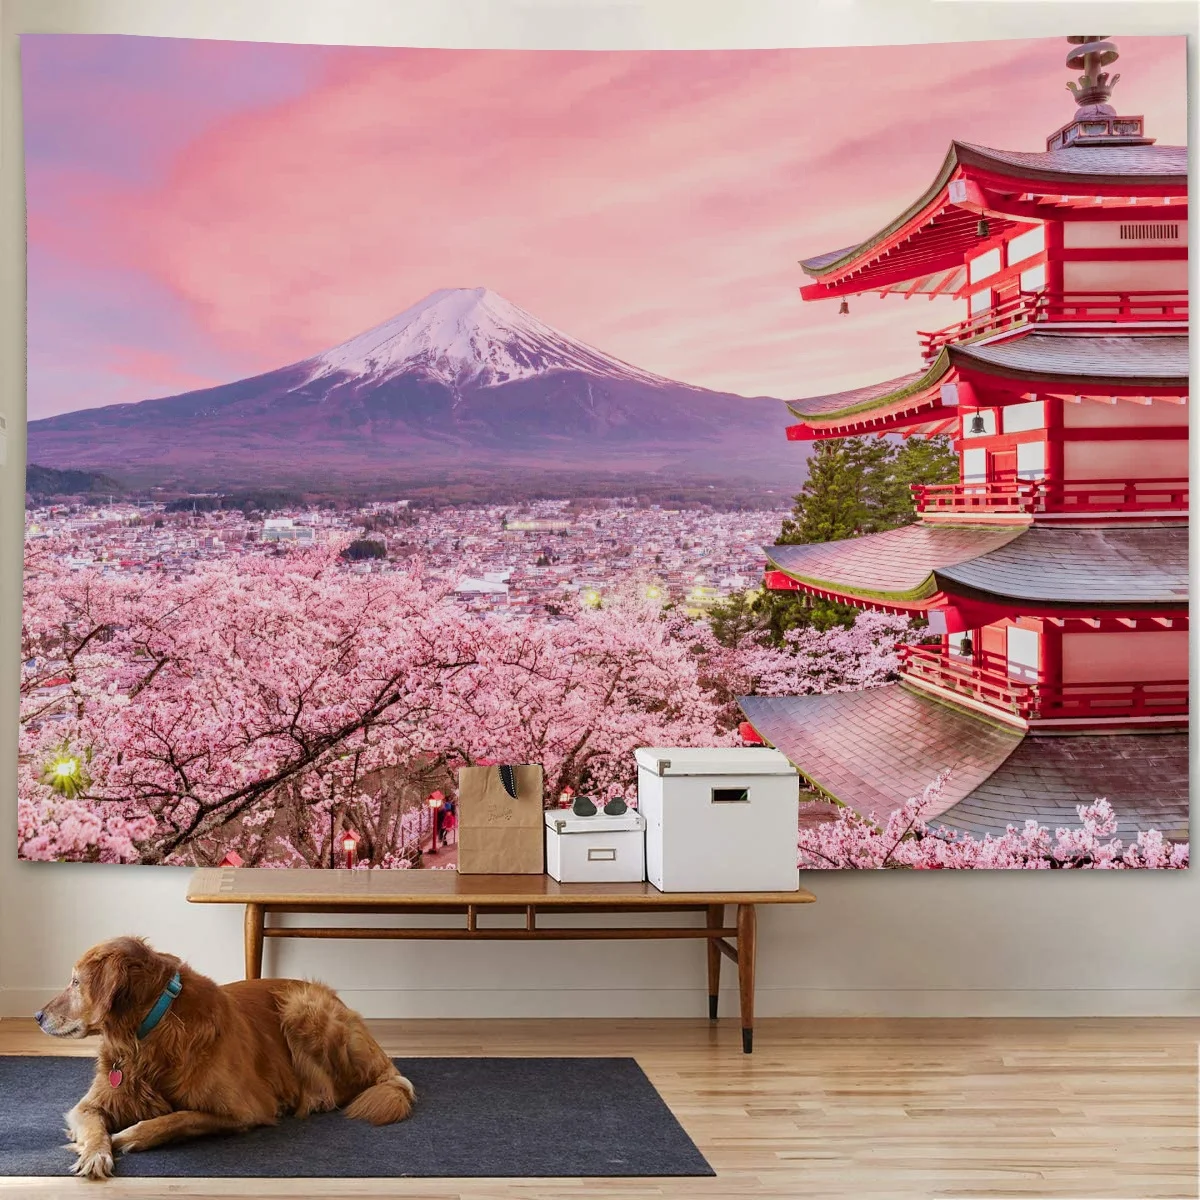 

Sakura Landscape Tapestry Wall Hanging Mount Fuji Scenery Tapestries Home Decoration Boho Blanket Japanese Room Decor Aesthetic